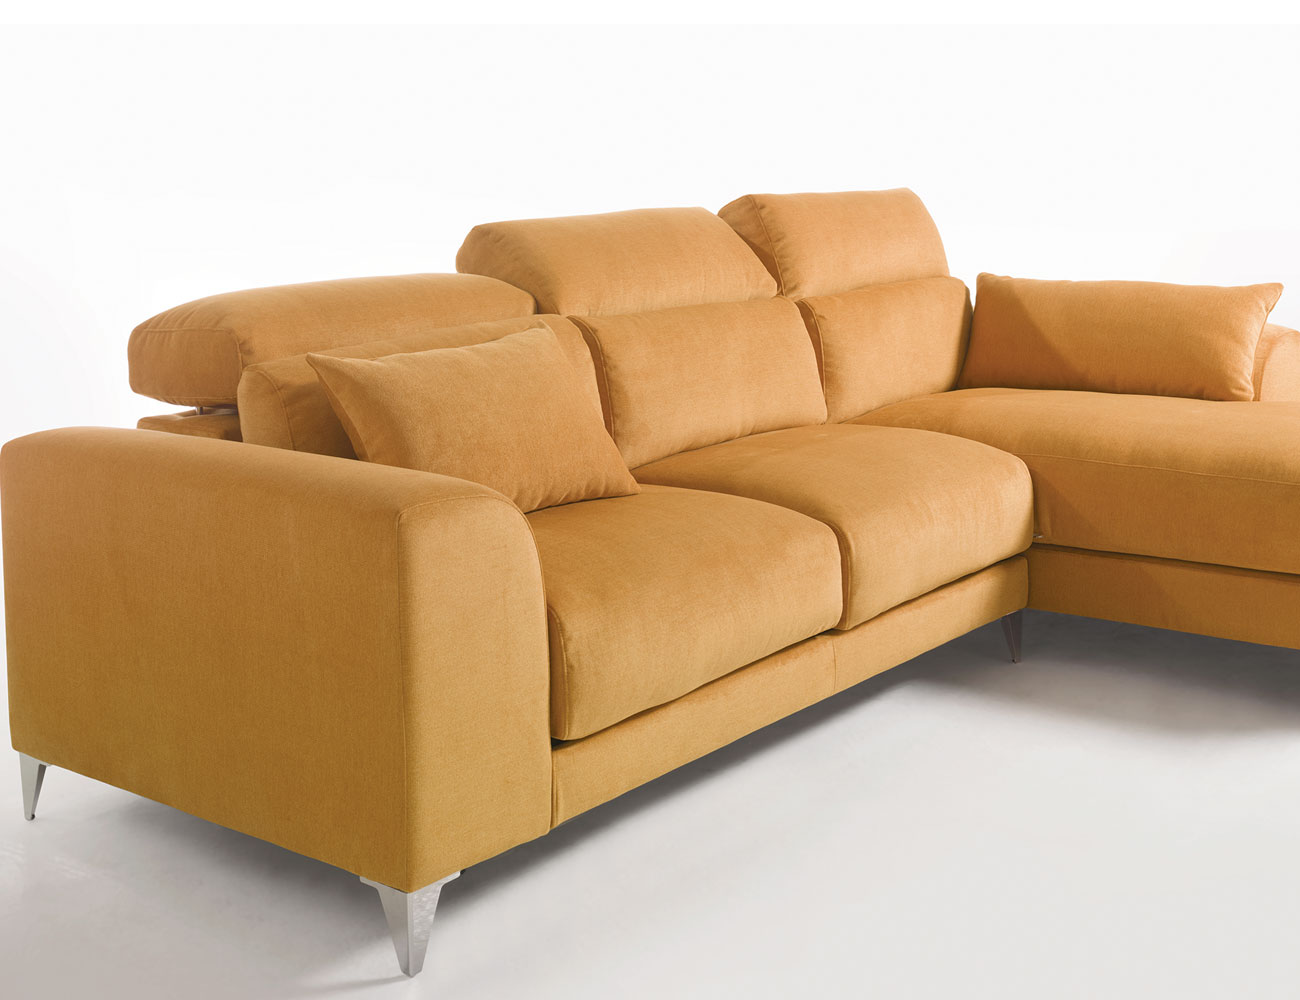 Sofa chaiselongue gran lujo decorativo patas altas amarillo 221